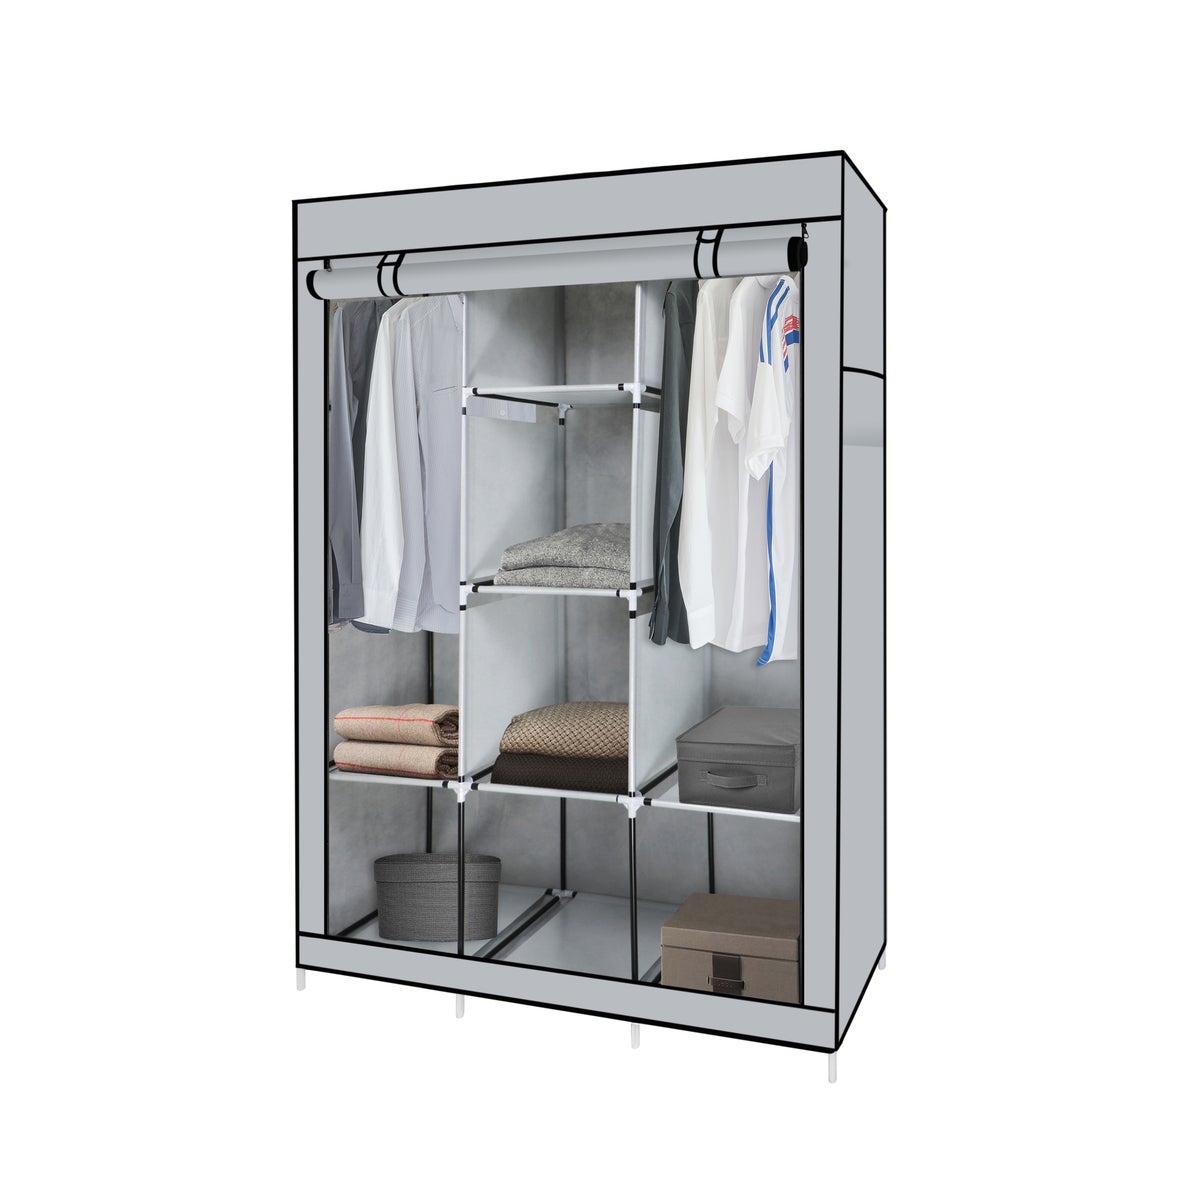 Grey - Storage Closet w/ Shelving (6)